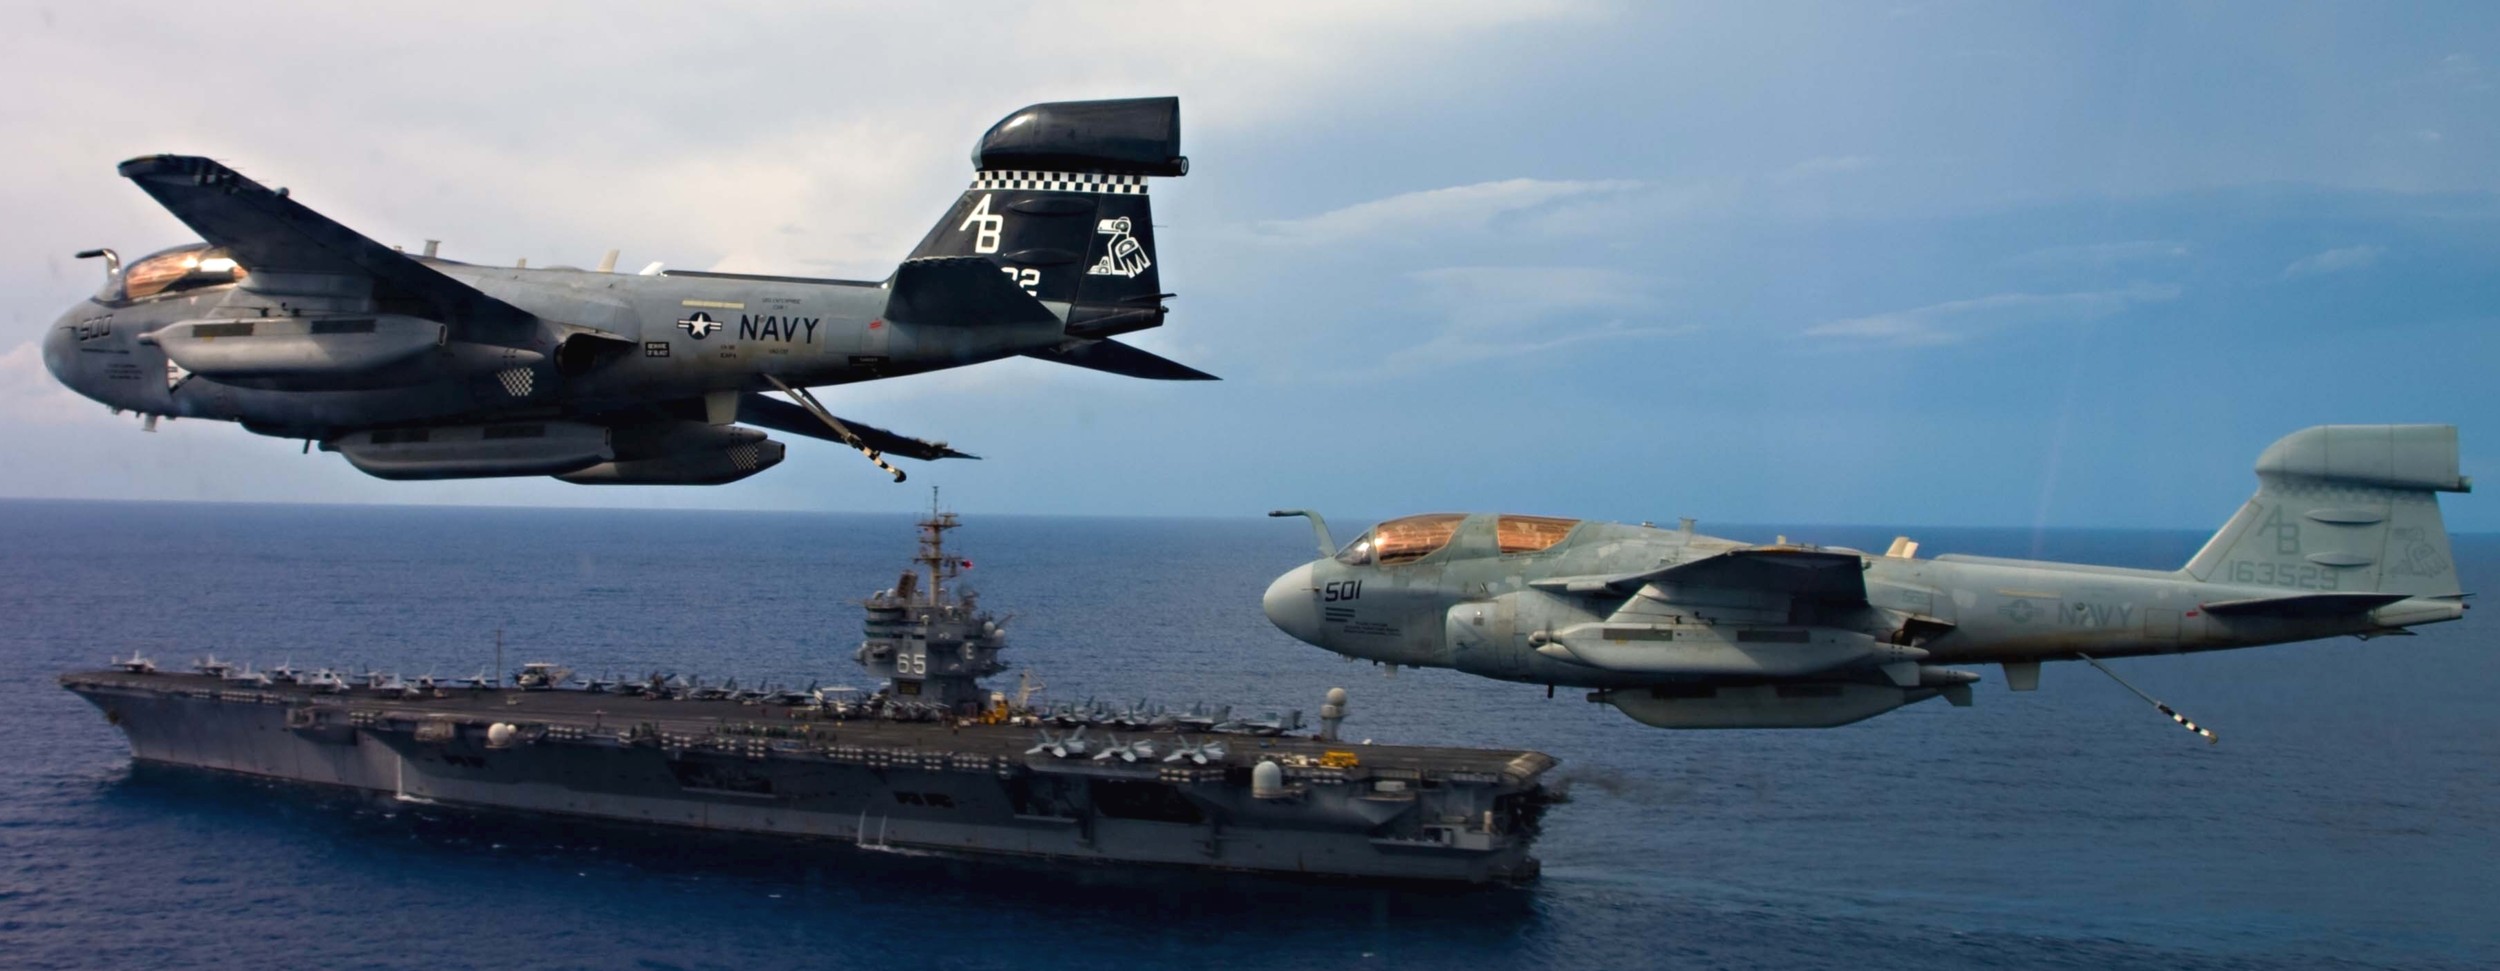 vaq-137 rooks electronic attack squadron us navy ea-6b prowler carrier air wing cvw-1 uss enterprise cvn-65 38